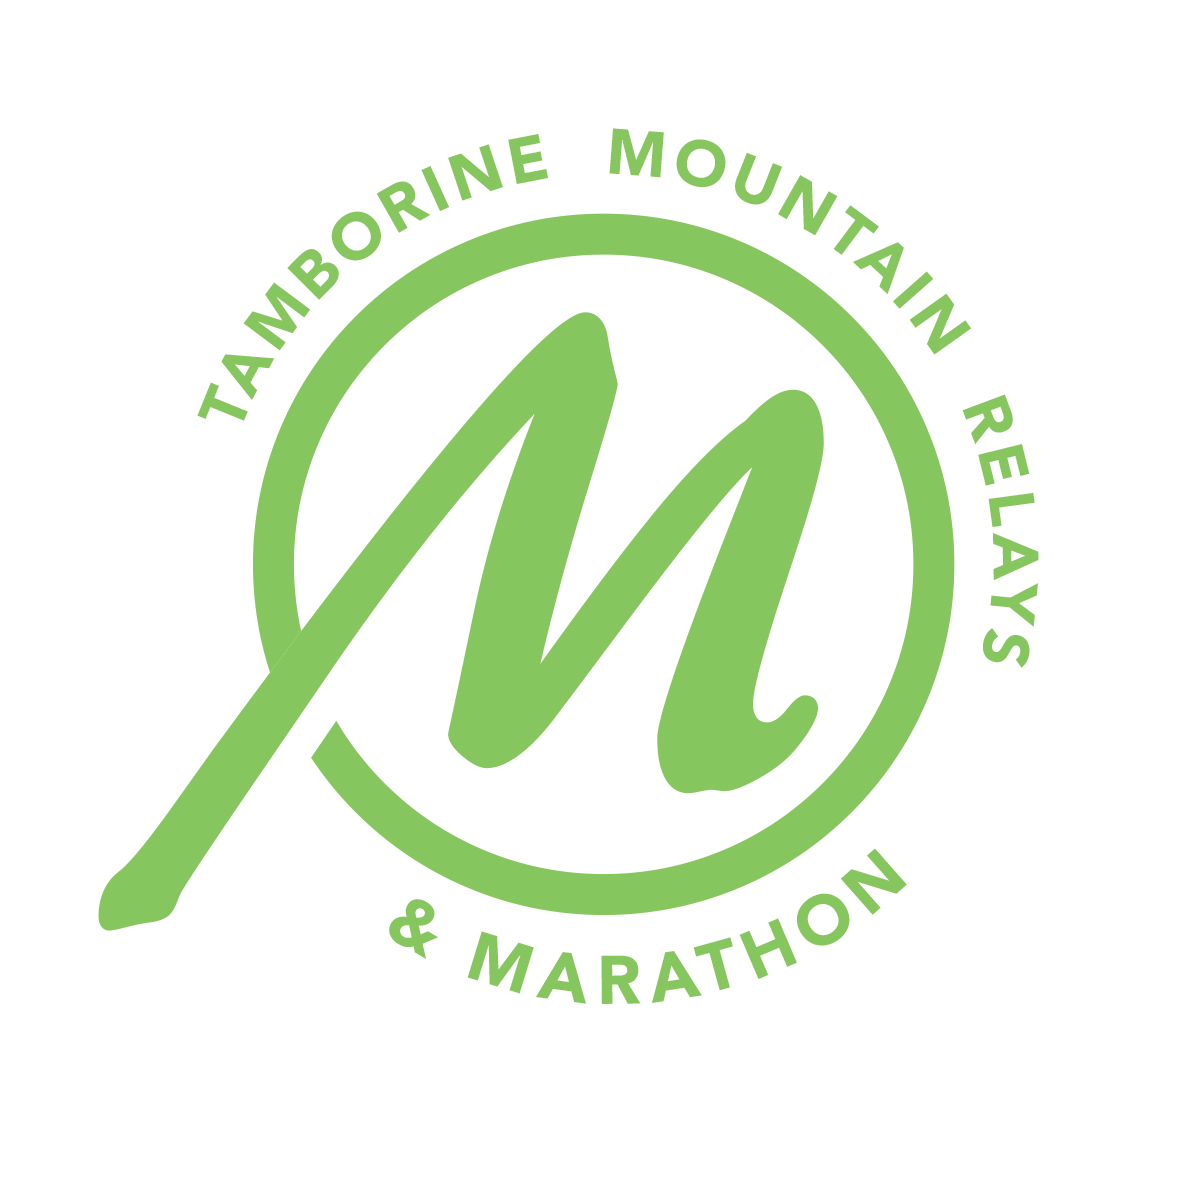 Tamborine Mountain Relays & Marathon